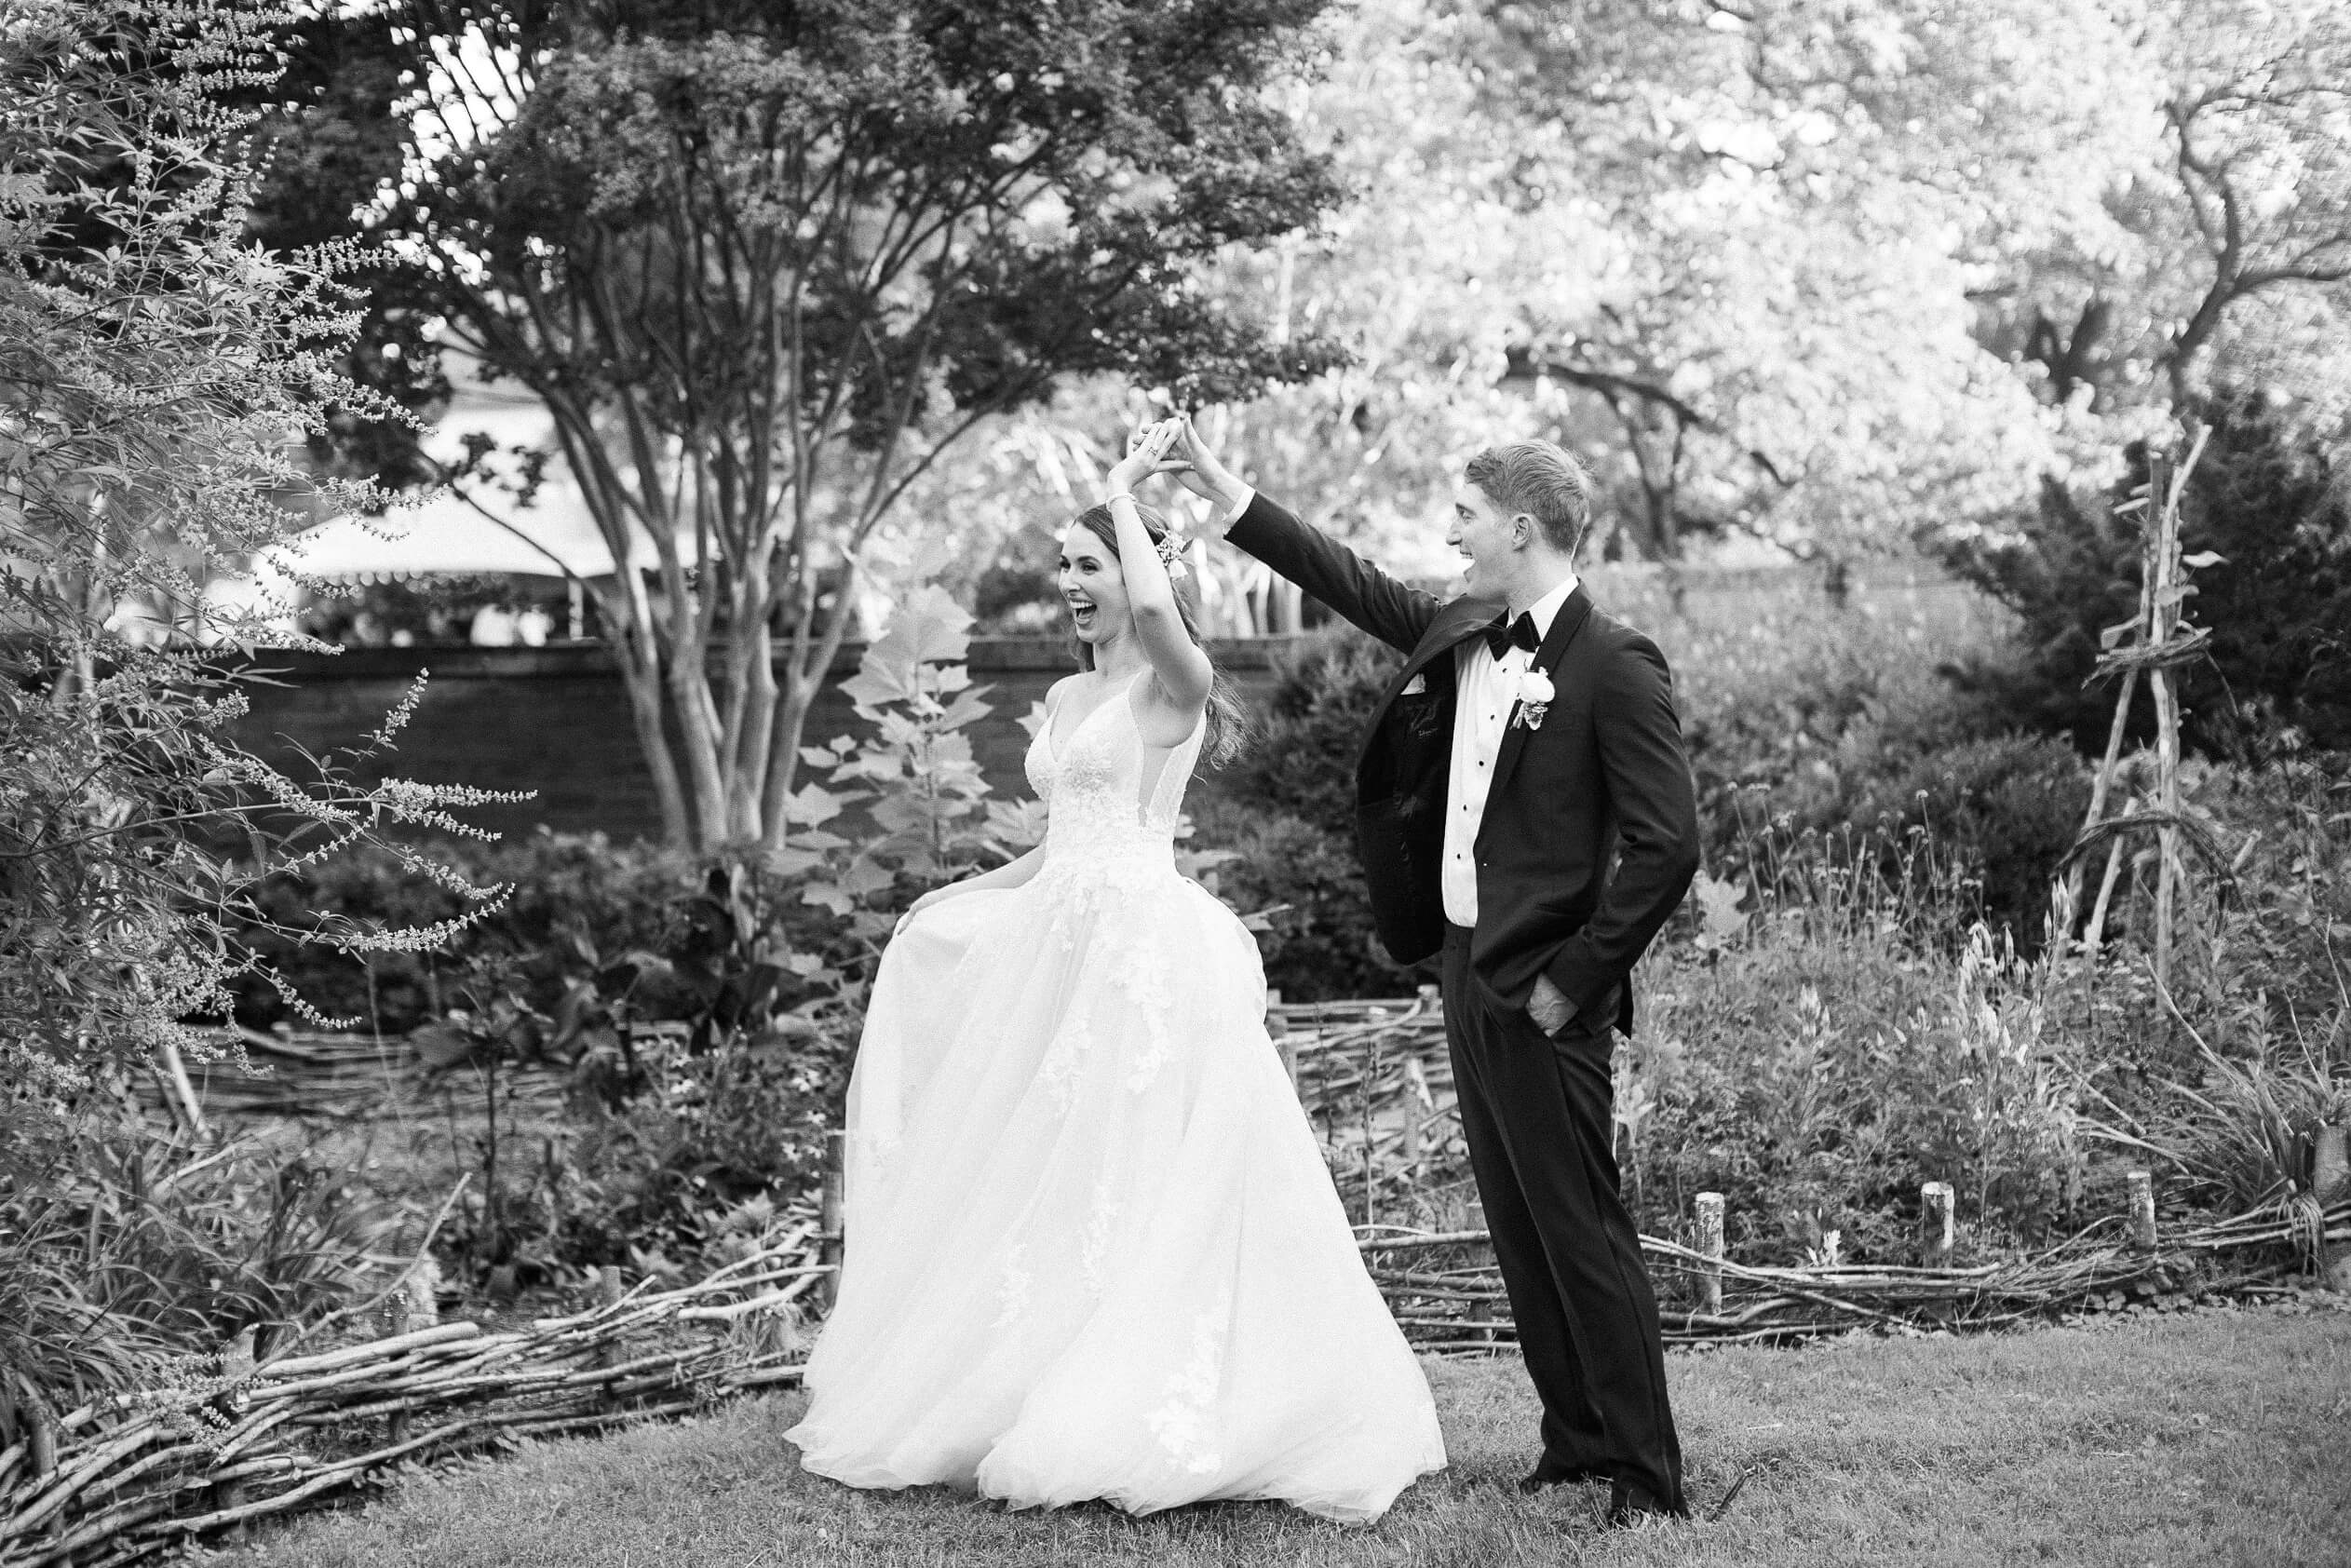 Groom spinning bride in wedding dress